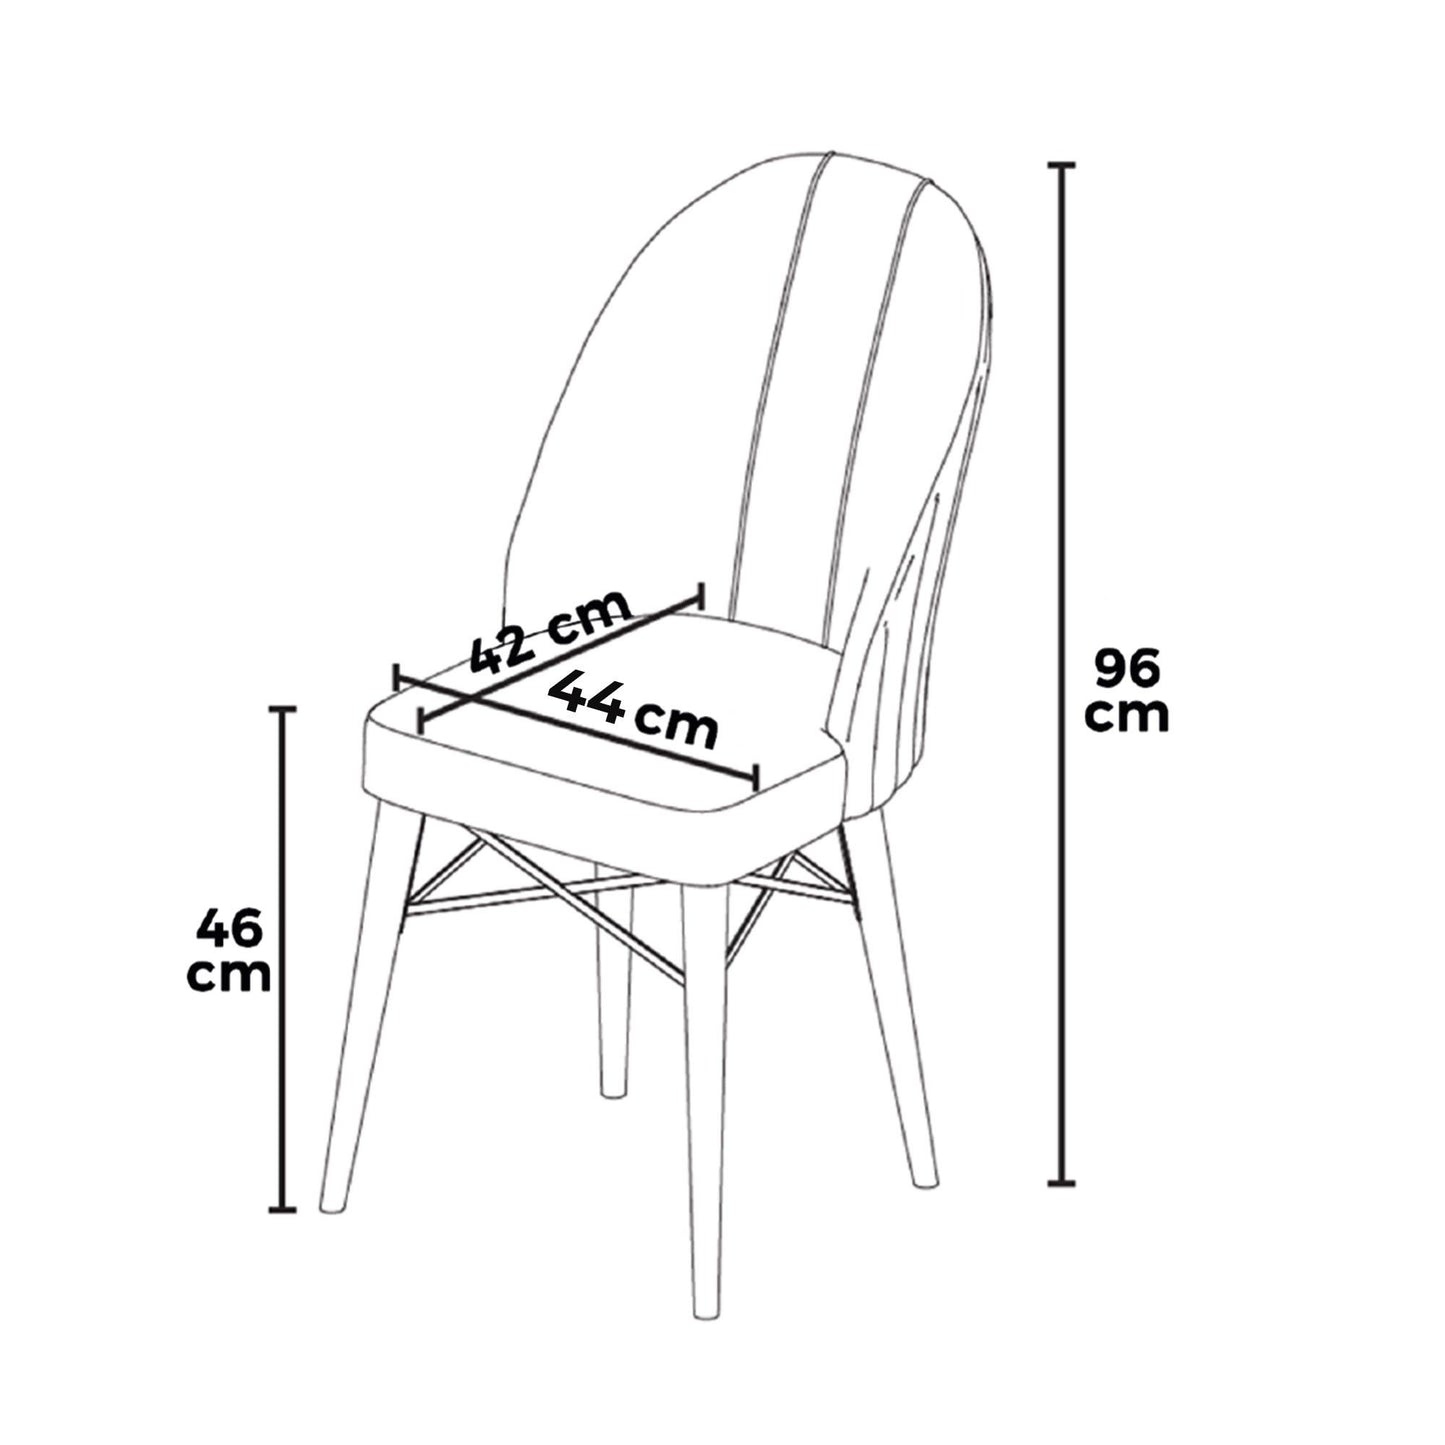 Ritim - Black, White - Chair Set (4 Pieces)